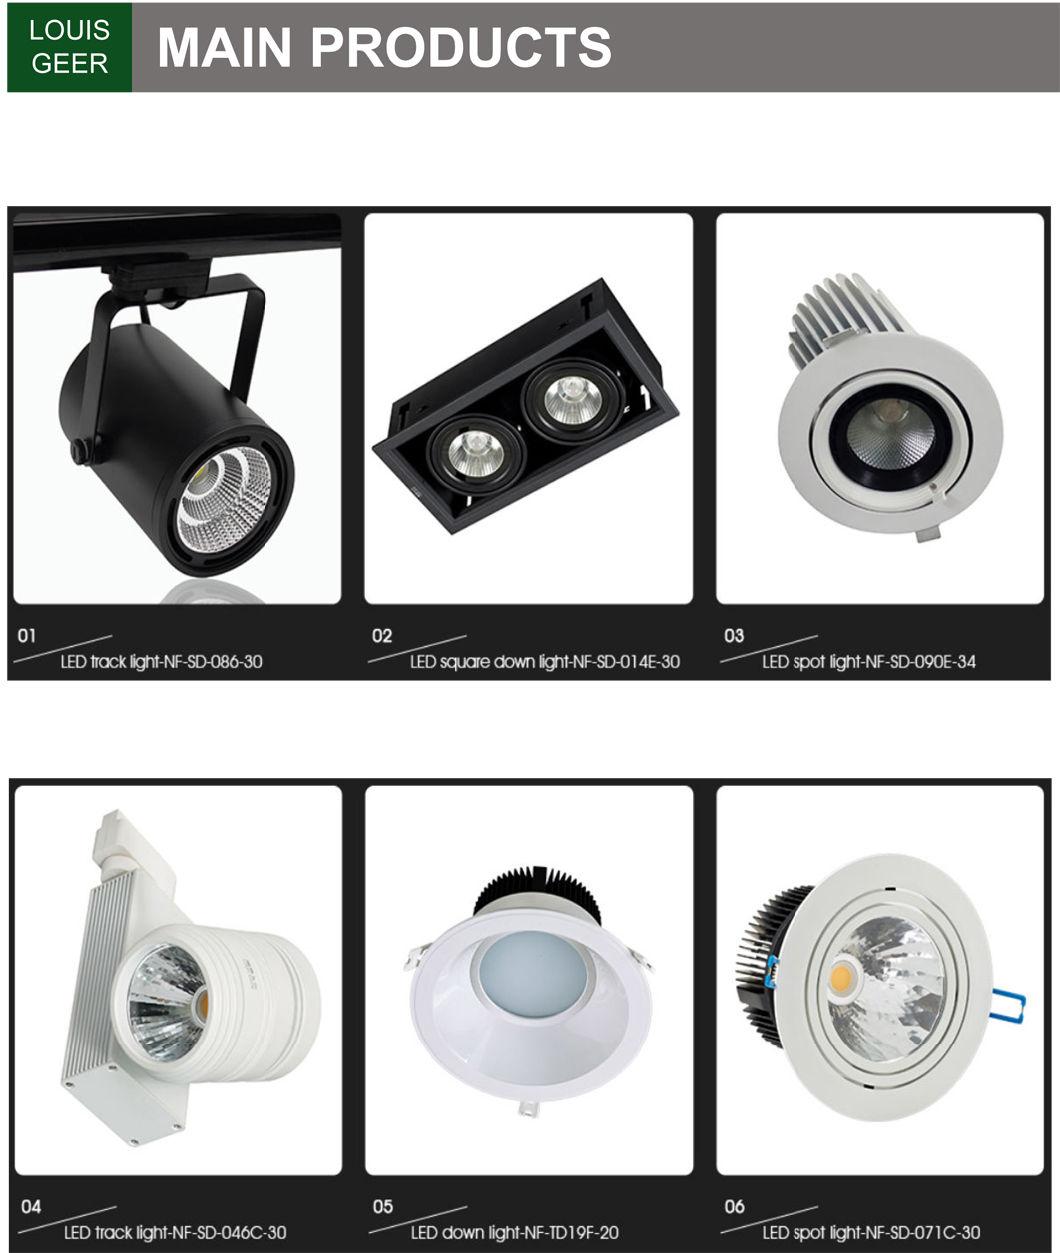 Commercial Adjustable Mini Recessed 7W 15W 18W 25W 30W Ceiling COB LED Downlight